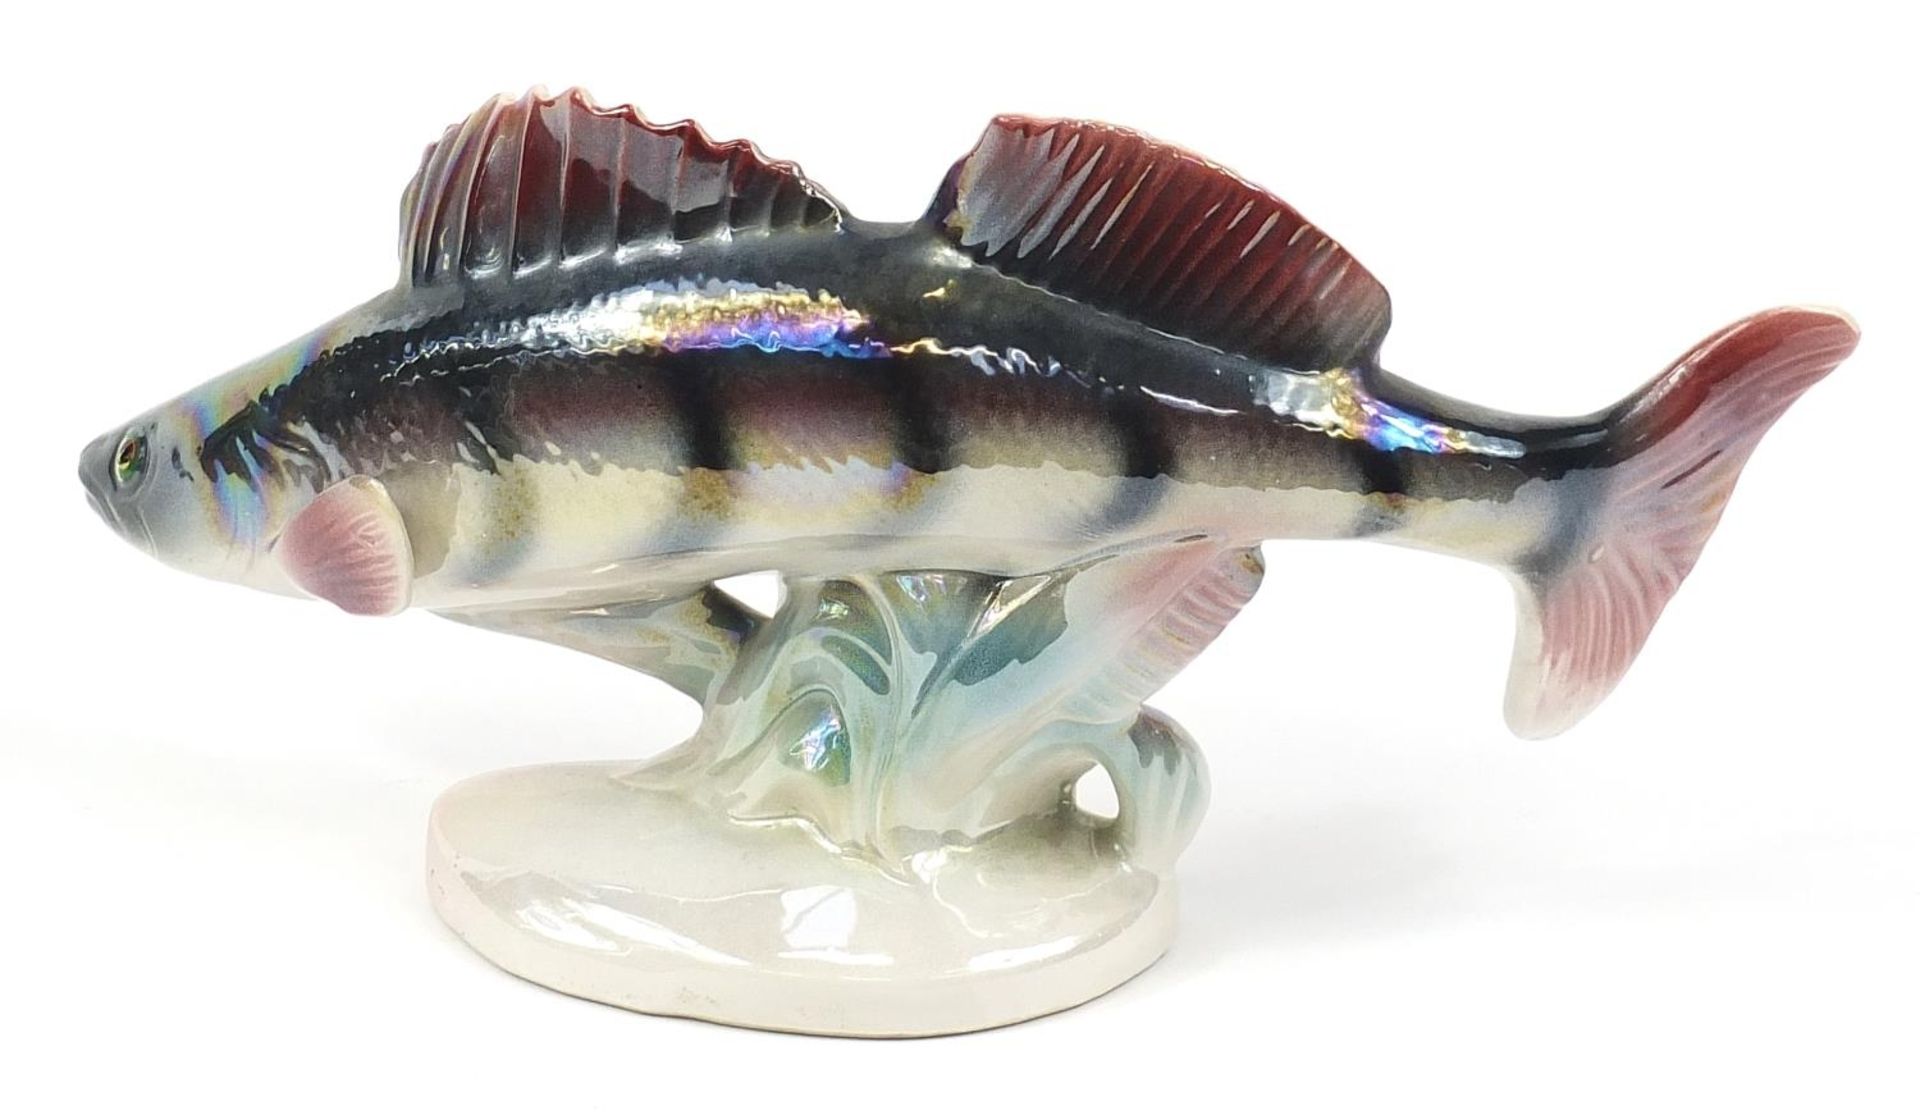 Jema, lustre glaze pottery fish, 40cm in length - Image 2 of 3